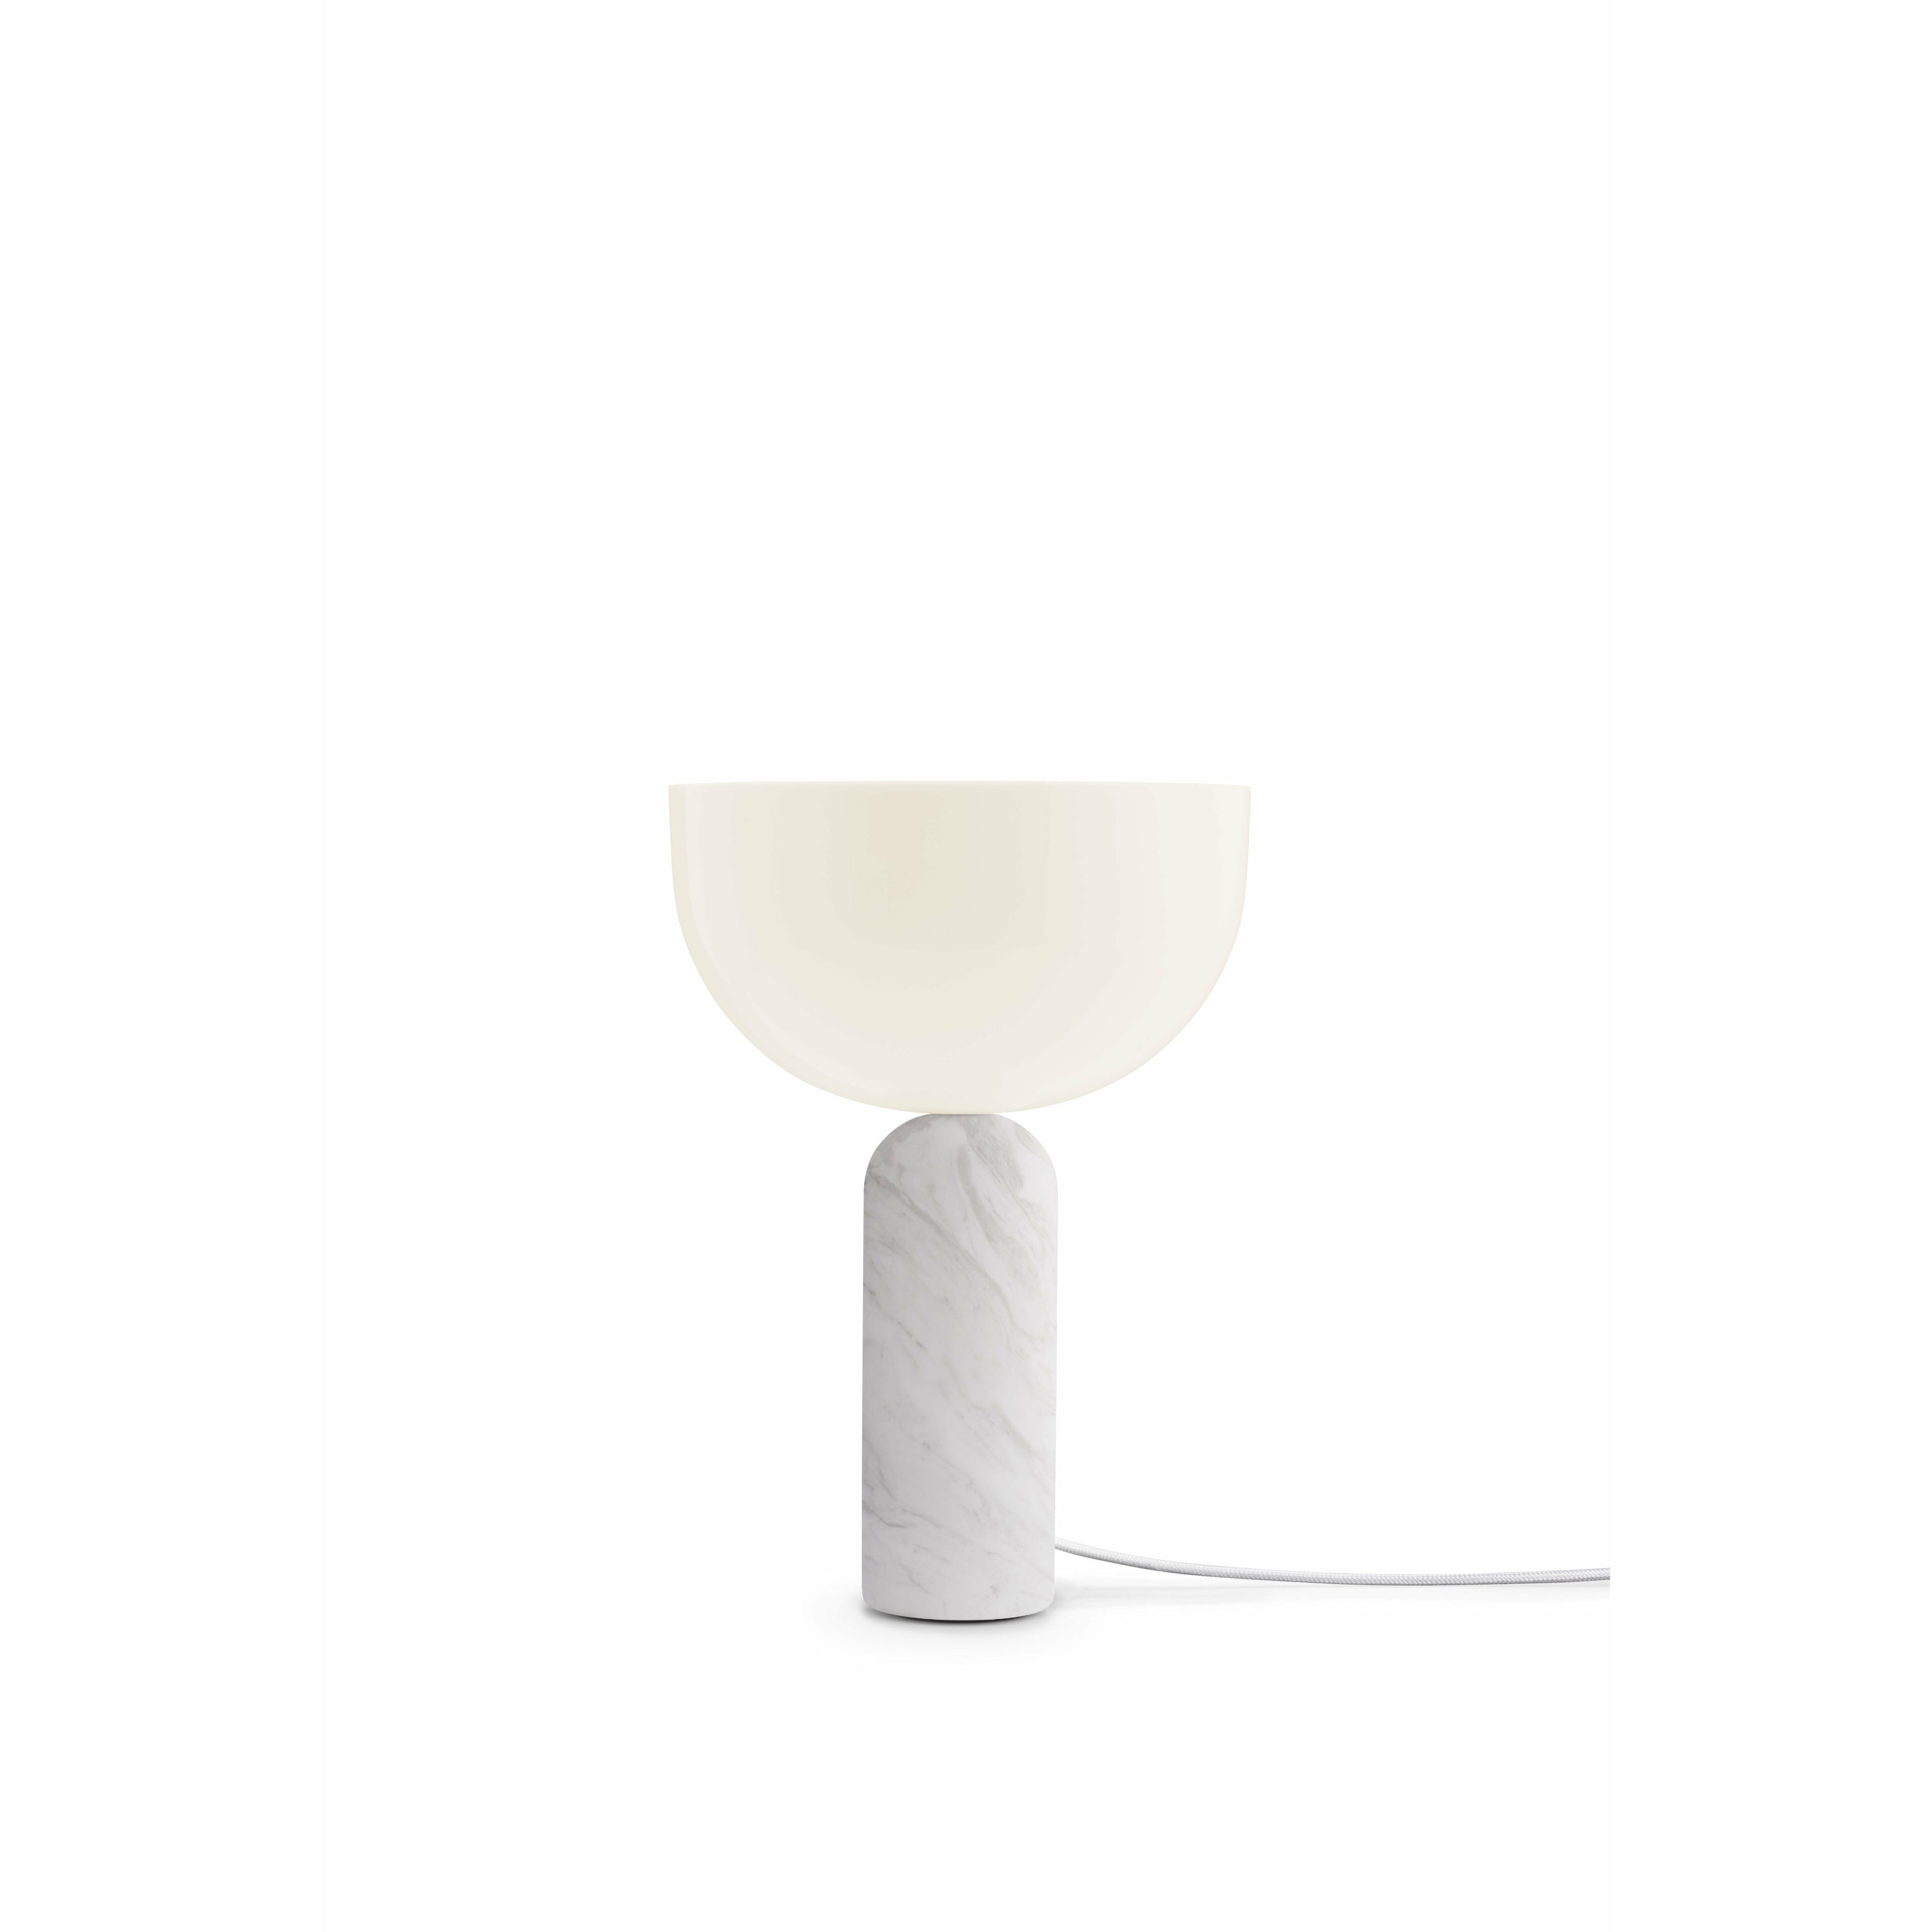 New Works Kizu bordslampa vit carrara marmor, liten